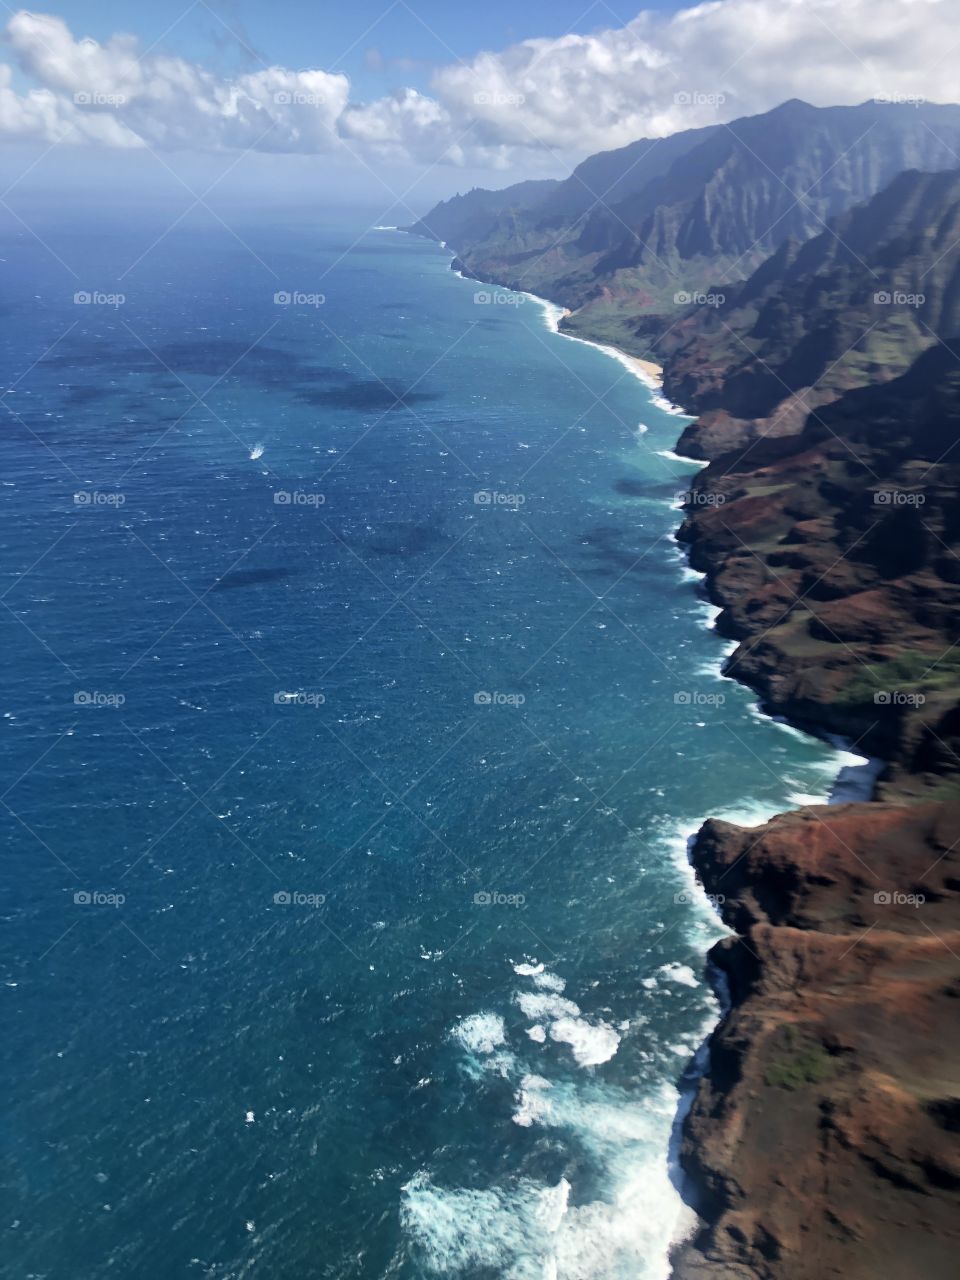 Coastal View of Kauai, Hawaii From Helicopter Tour.